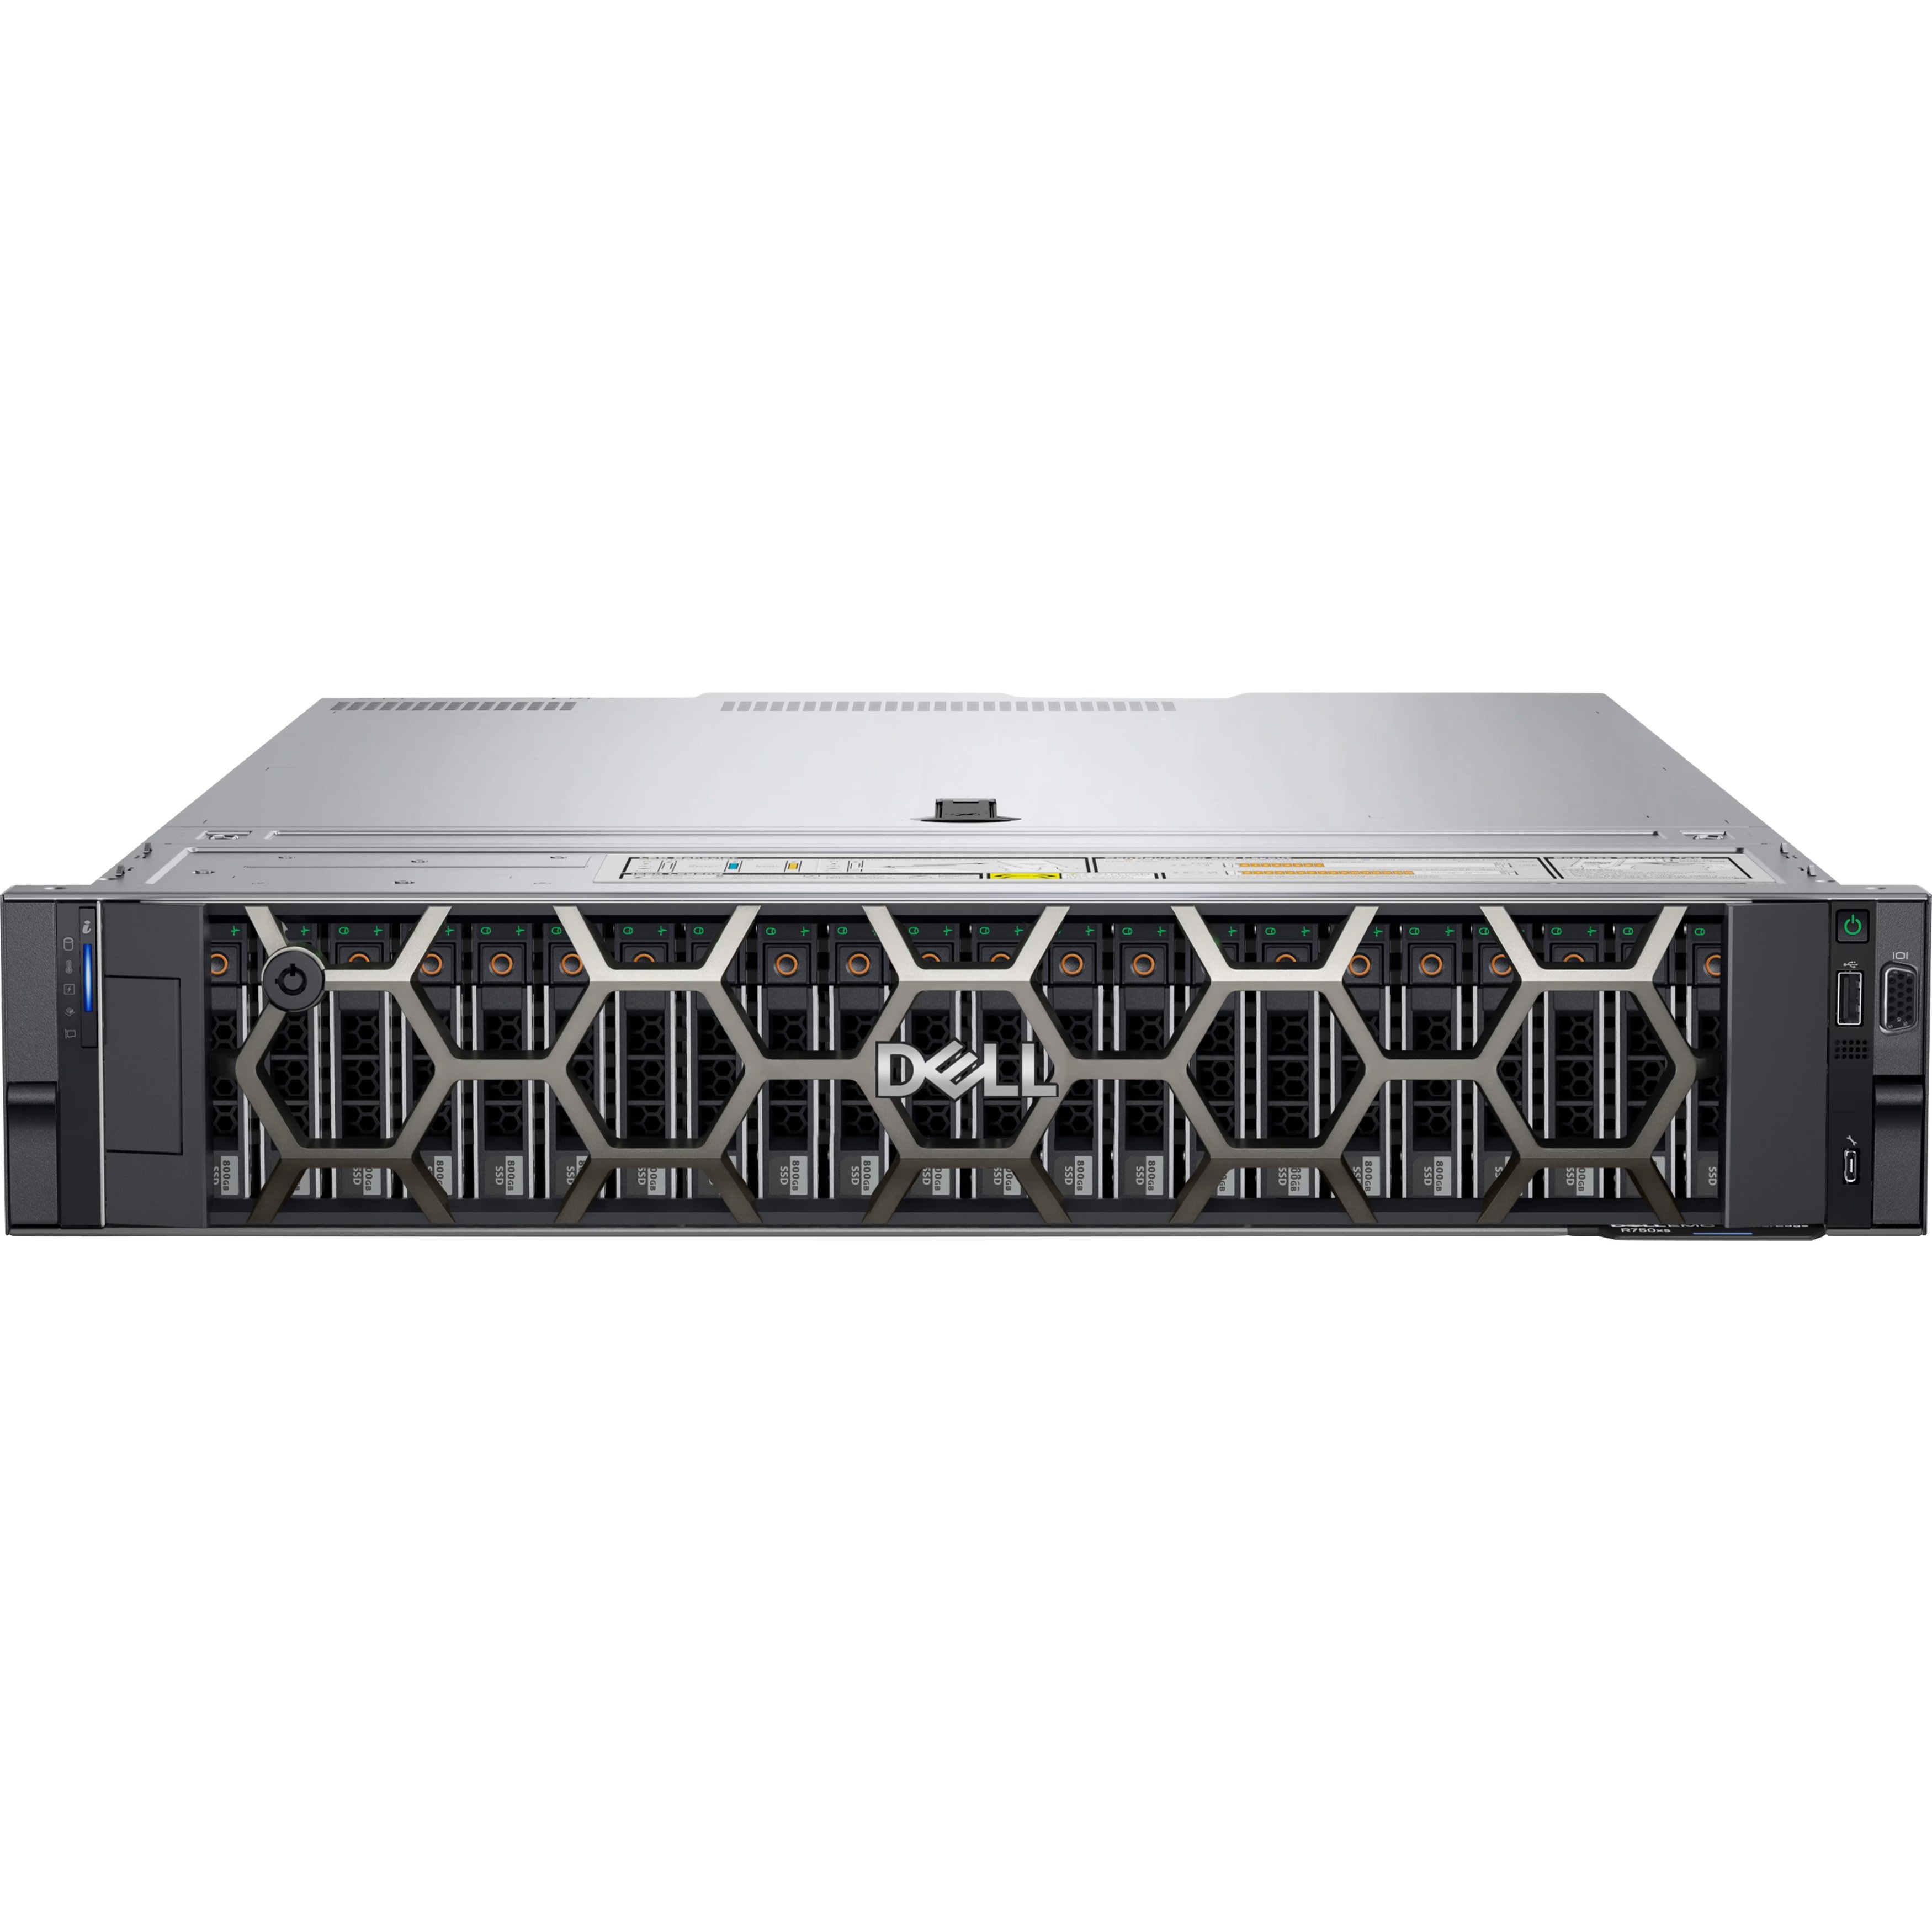 NEMIX RAM 128GB (8x16GB) DDR4-3200 PC4-25600 ECC RDIMM Registered Server  Memory Upgrade for Dell PowerEdge R750XS Rack Server 